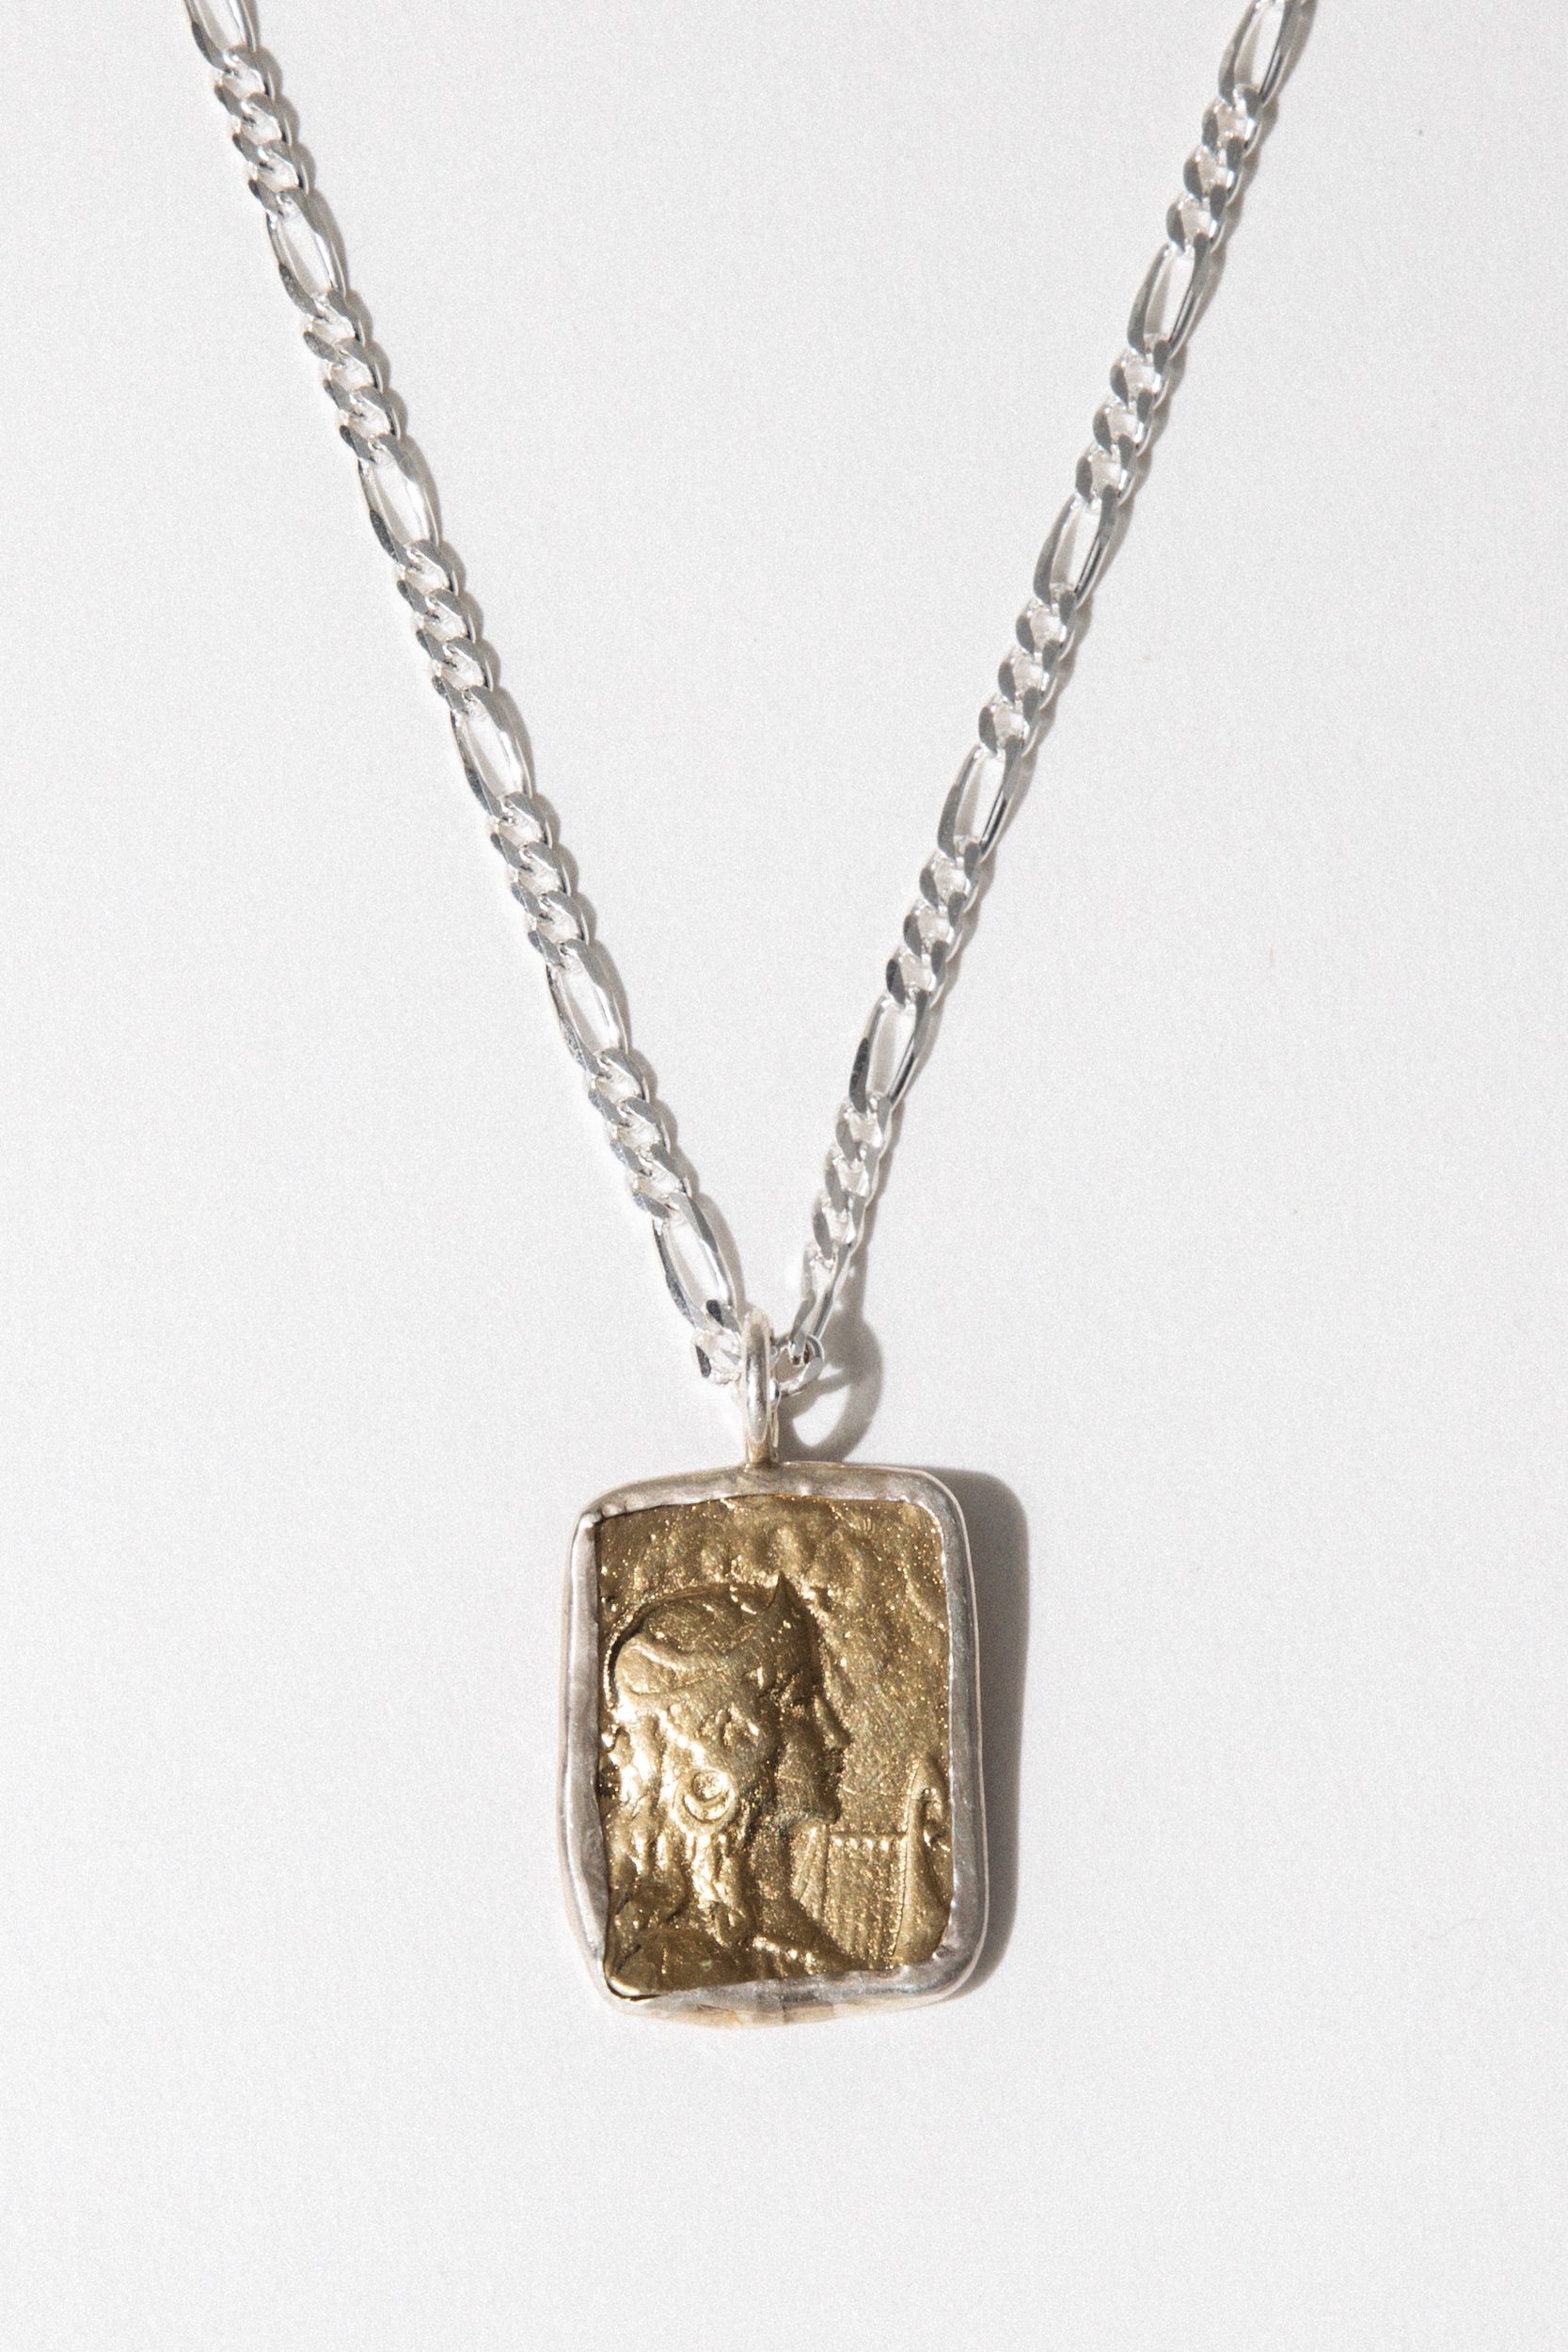 Goddess Necklace .:. Silver